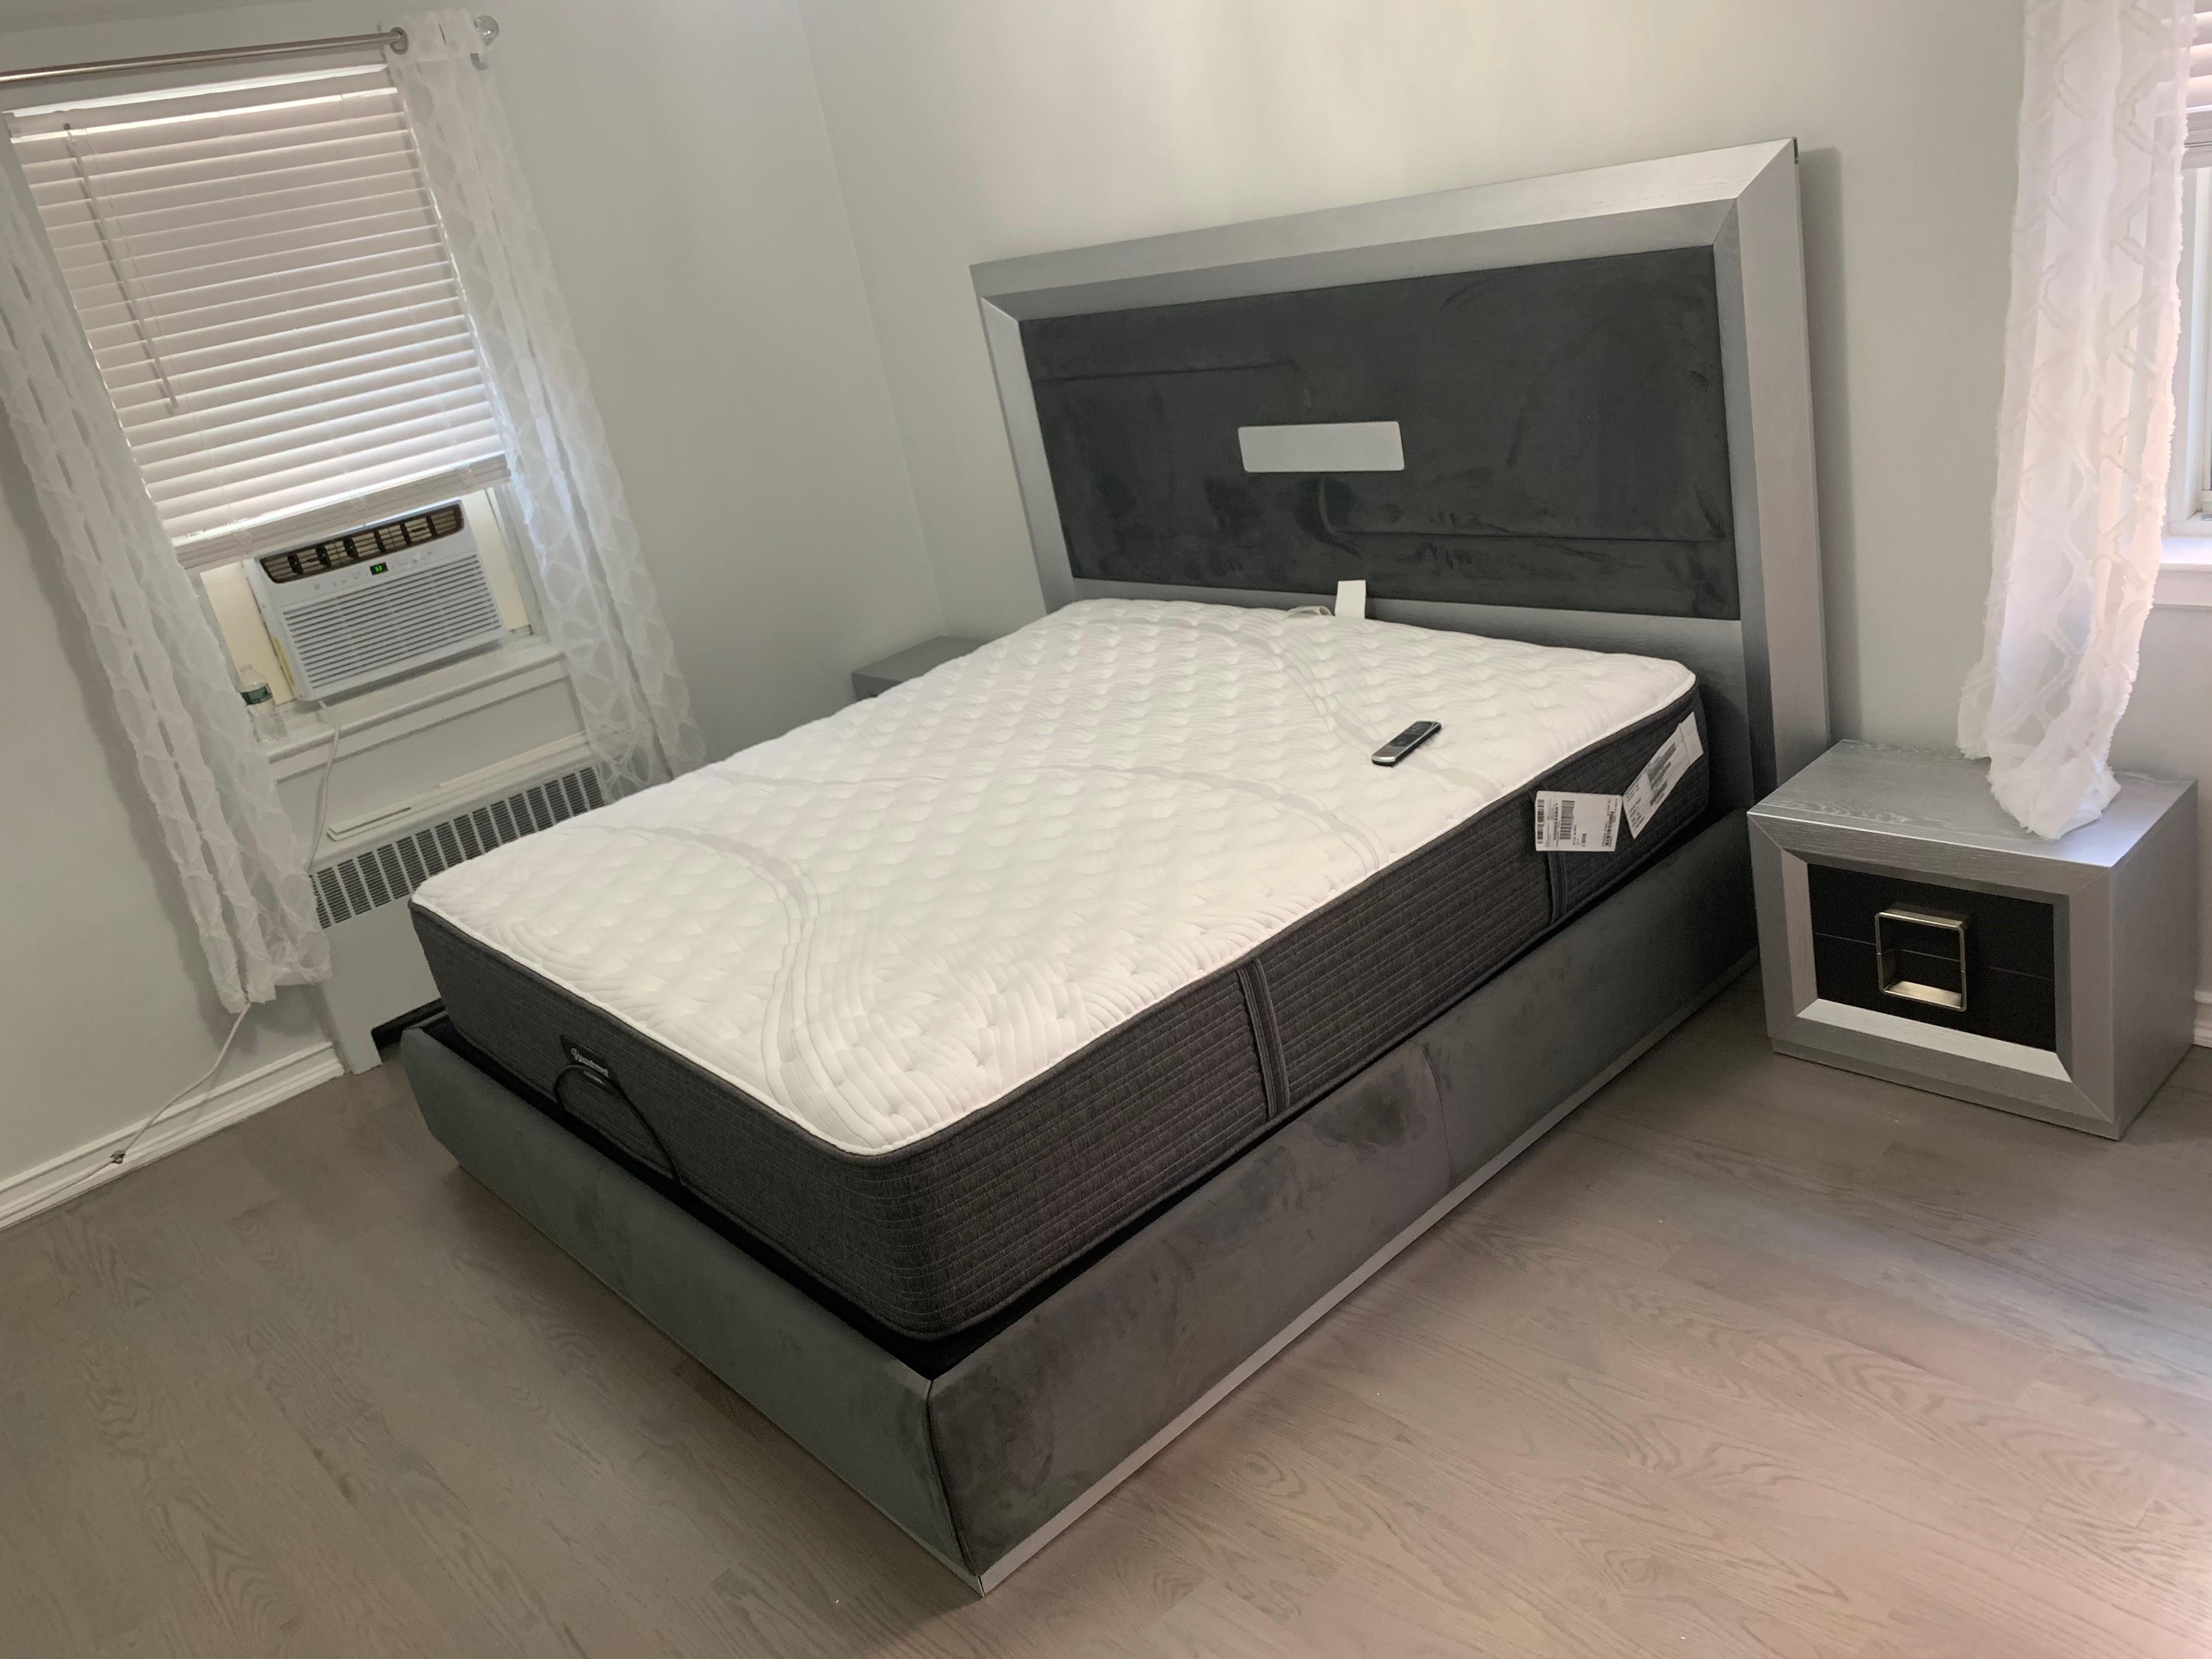 

    
ENZOBEDKS-2NDM-5PC Grey Microfiber King Bedroom Set 5P Enzo ESF Modern Contemporary Franco Spain
